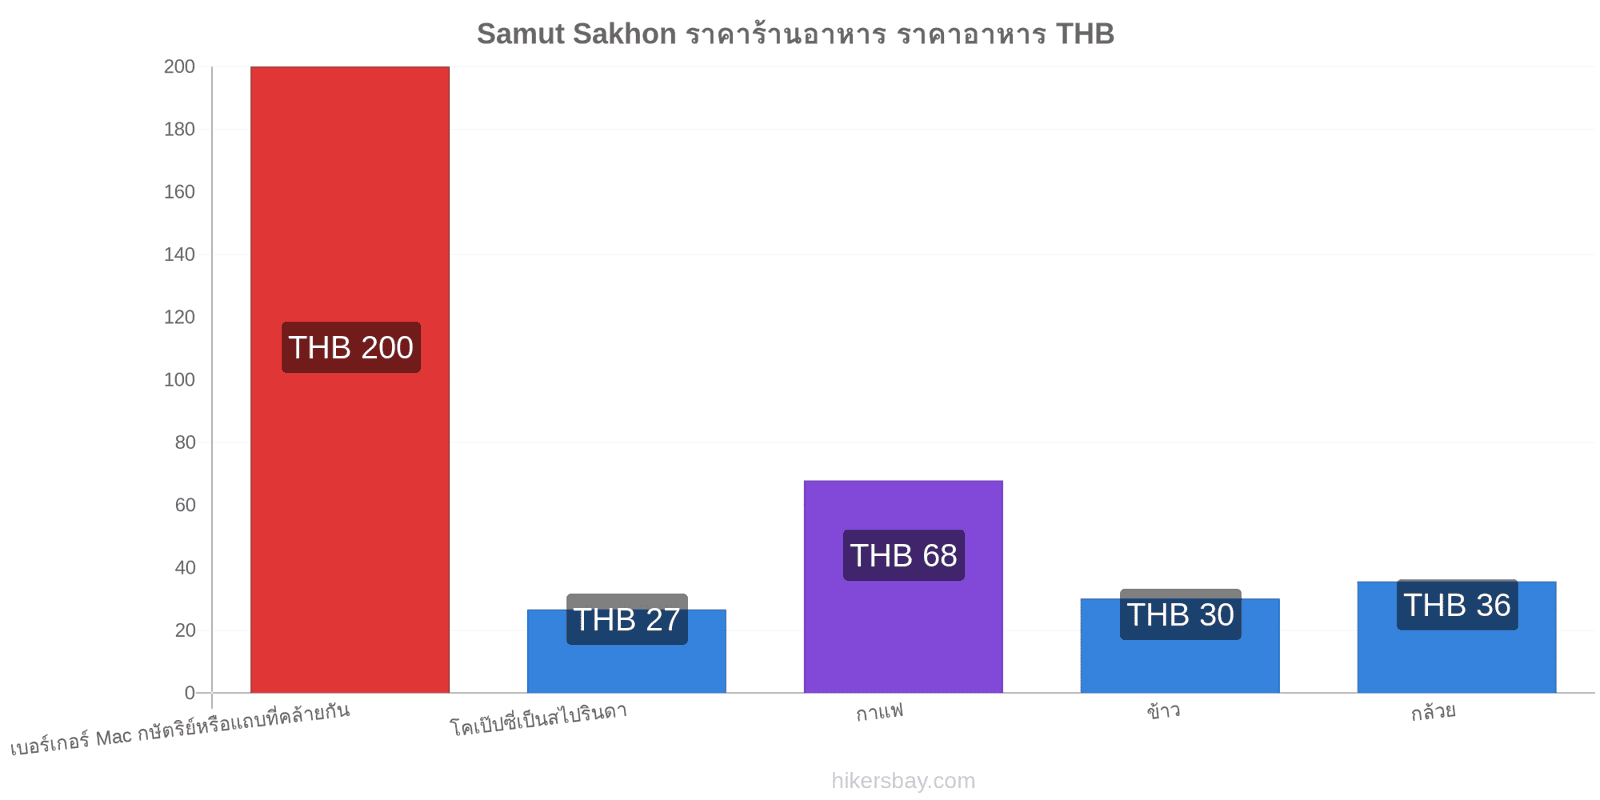 Samut Sakhon การเปลี่ยนแปลงราคา hikersbay.com